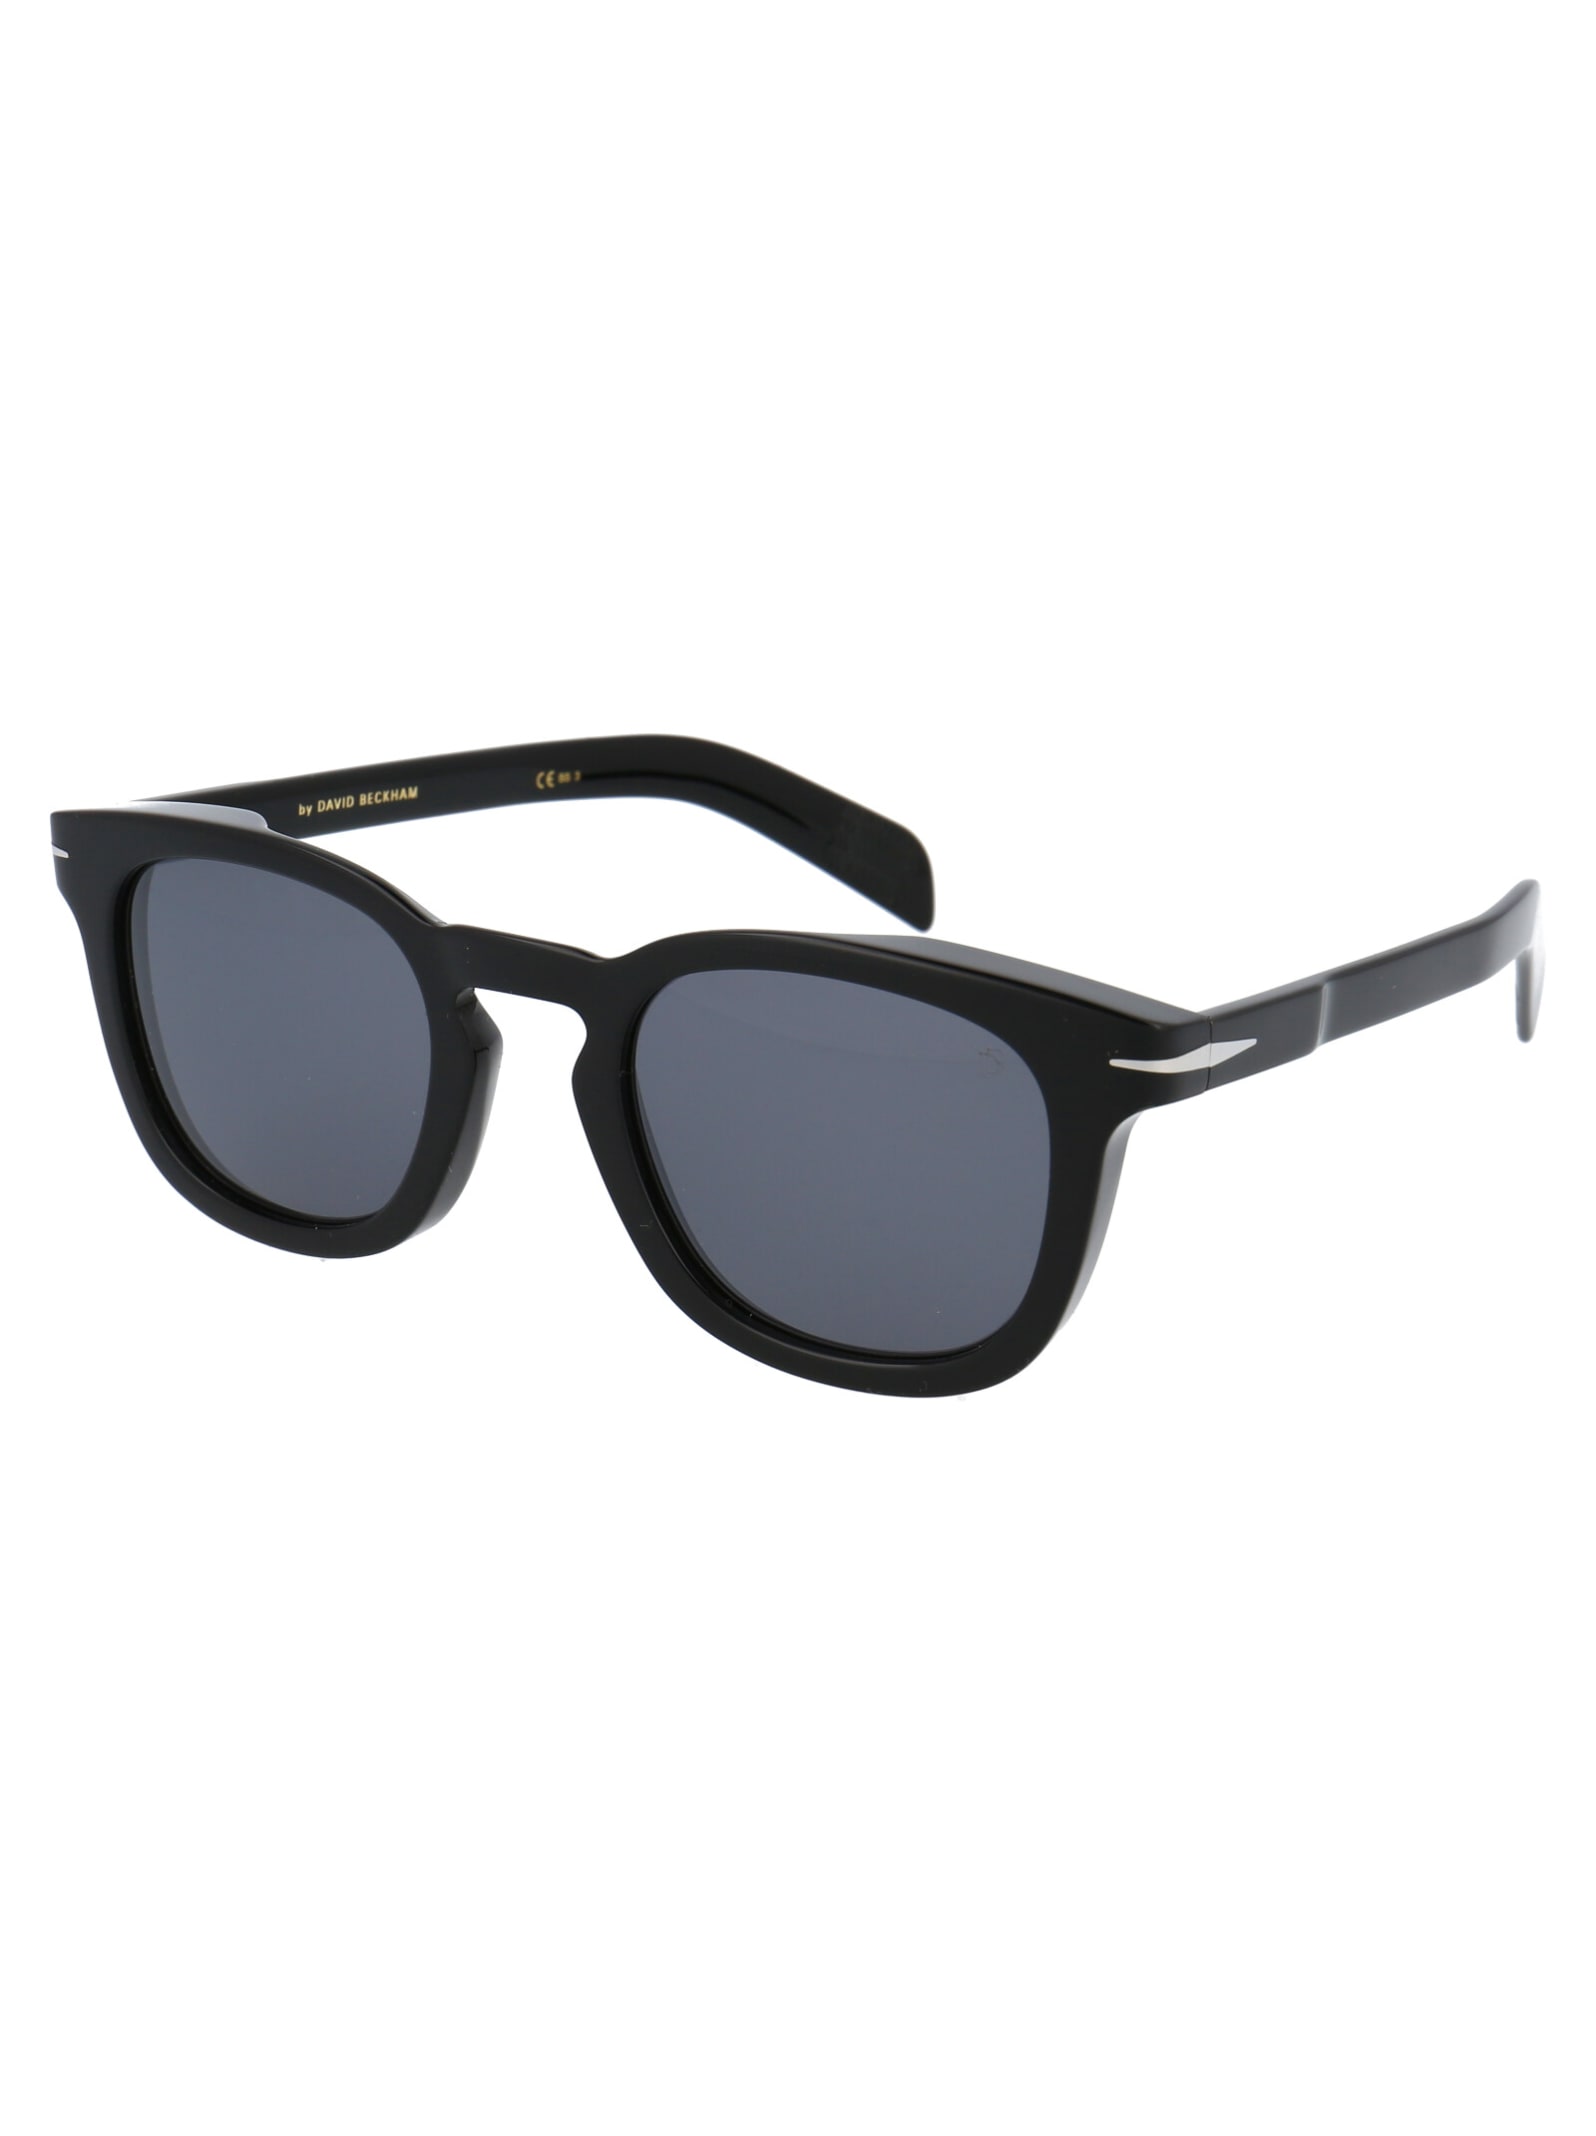 Db Eyewear By David Beckham Db 7062/s Sunglasses In 807t4 Black | ModeSens